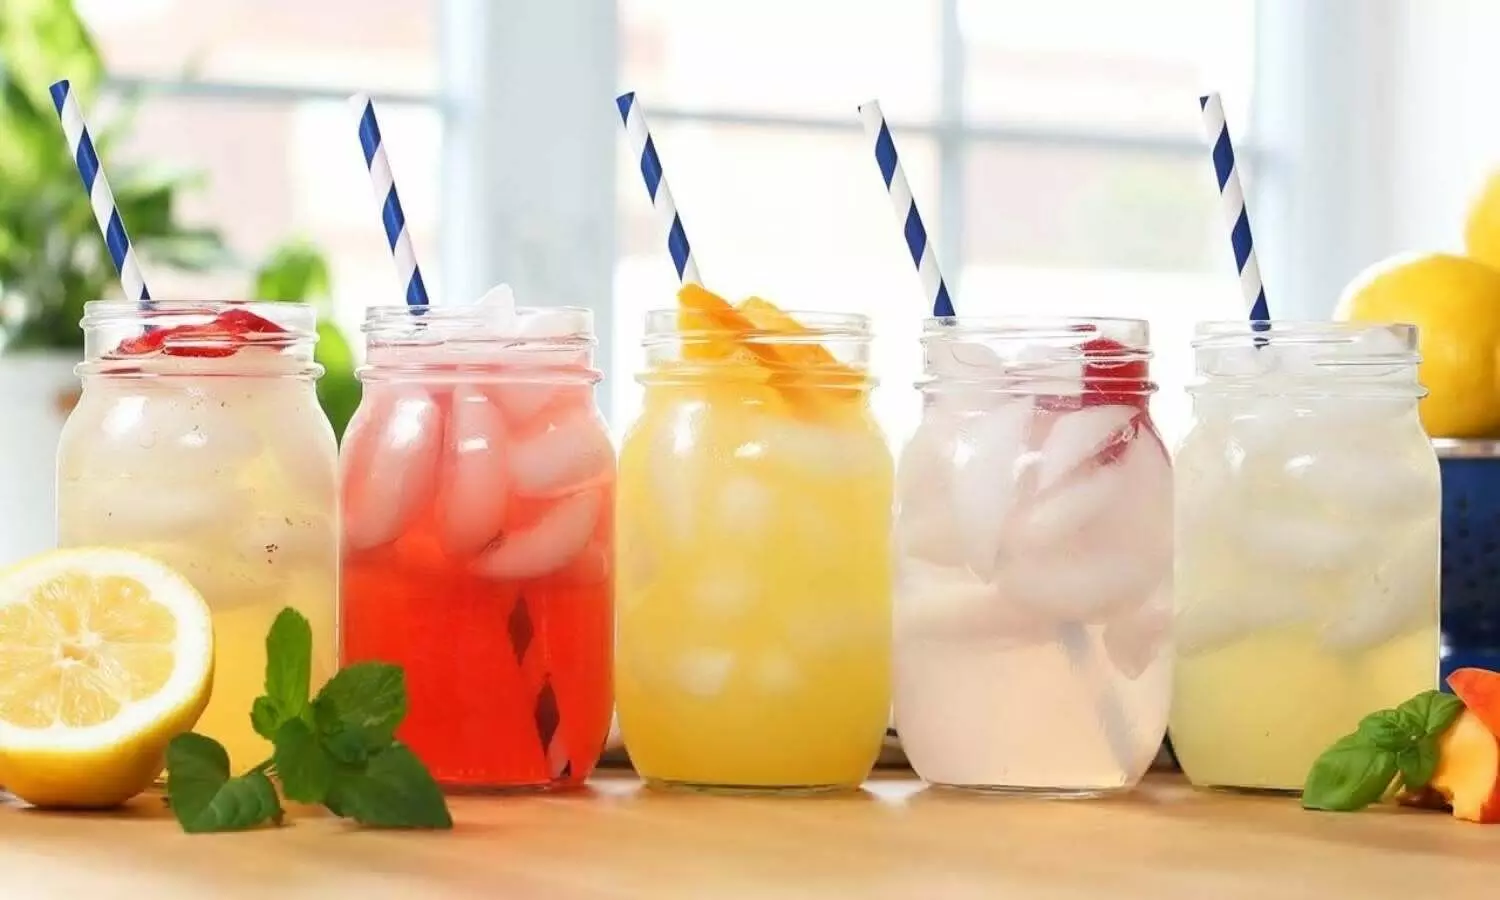 Strawberry lemonade recipe in hindi